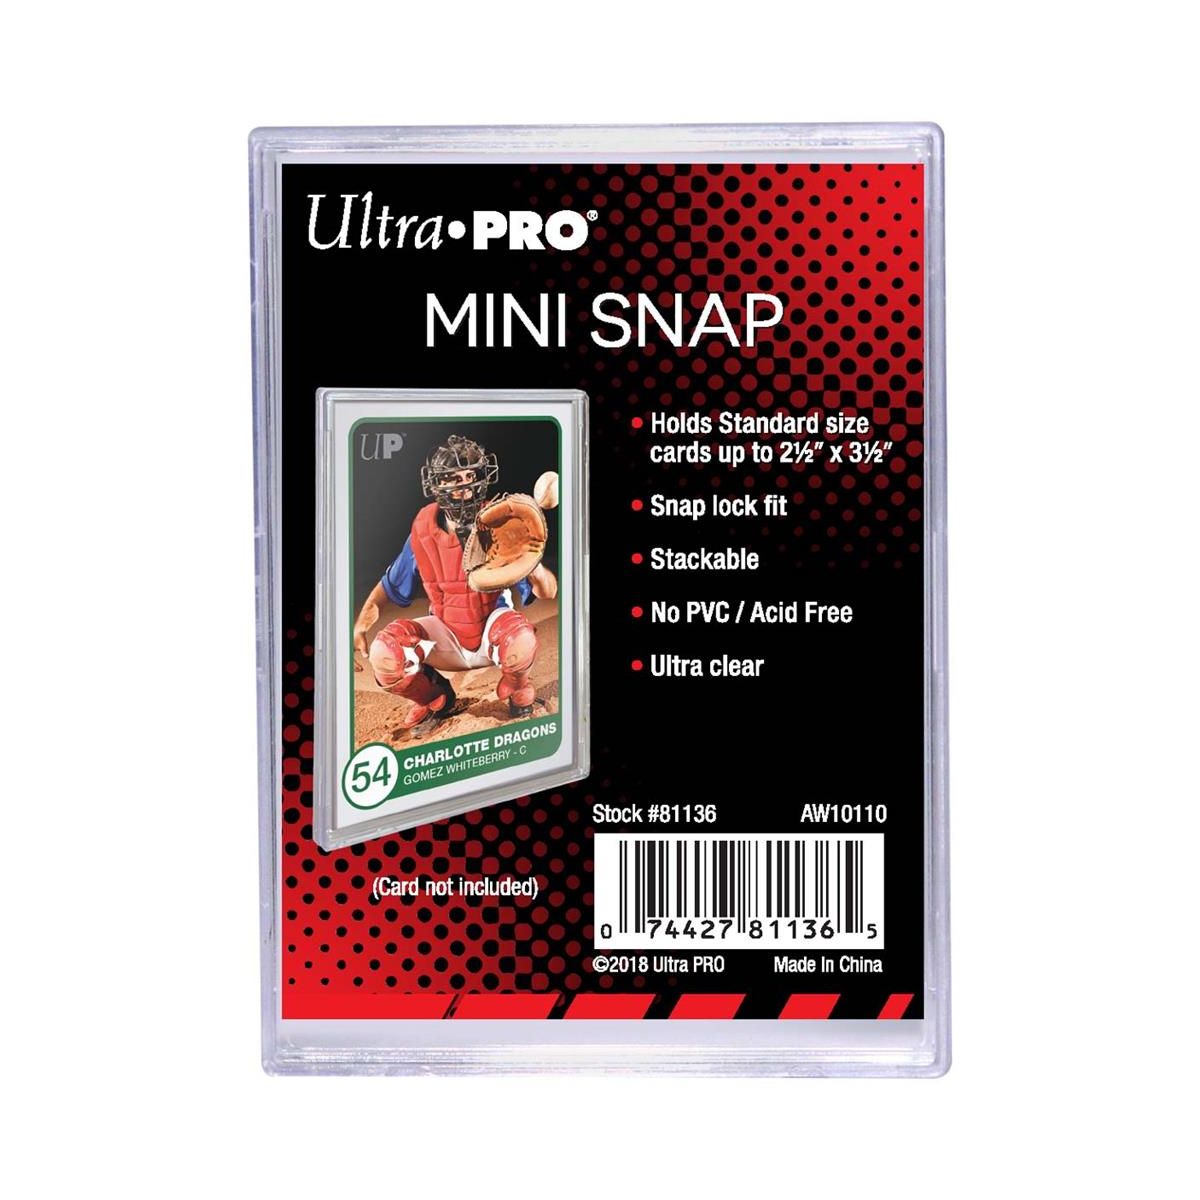 Item Ultra Pro – Starrer Kartenschutz – UP Mini-Snap-Kartenhalter – Top Loader (1)